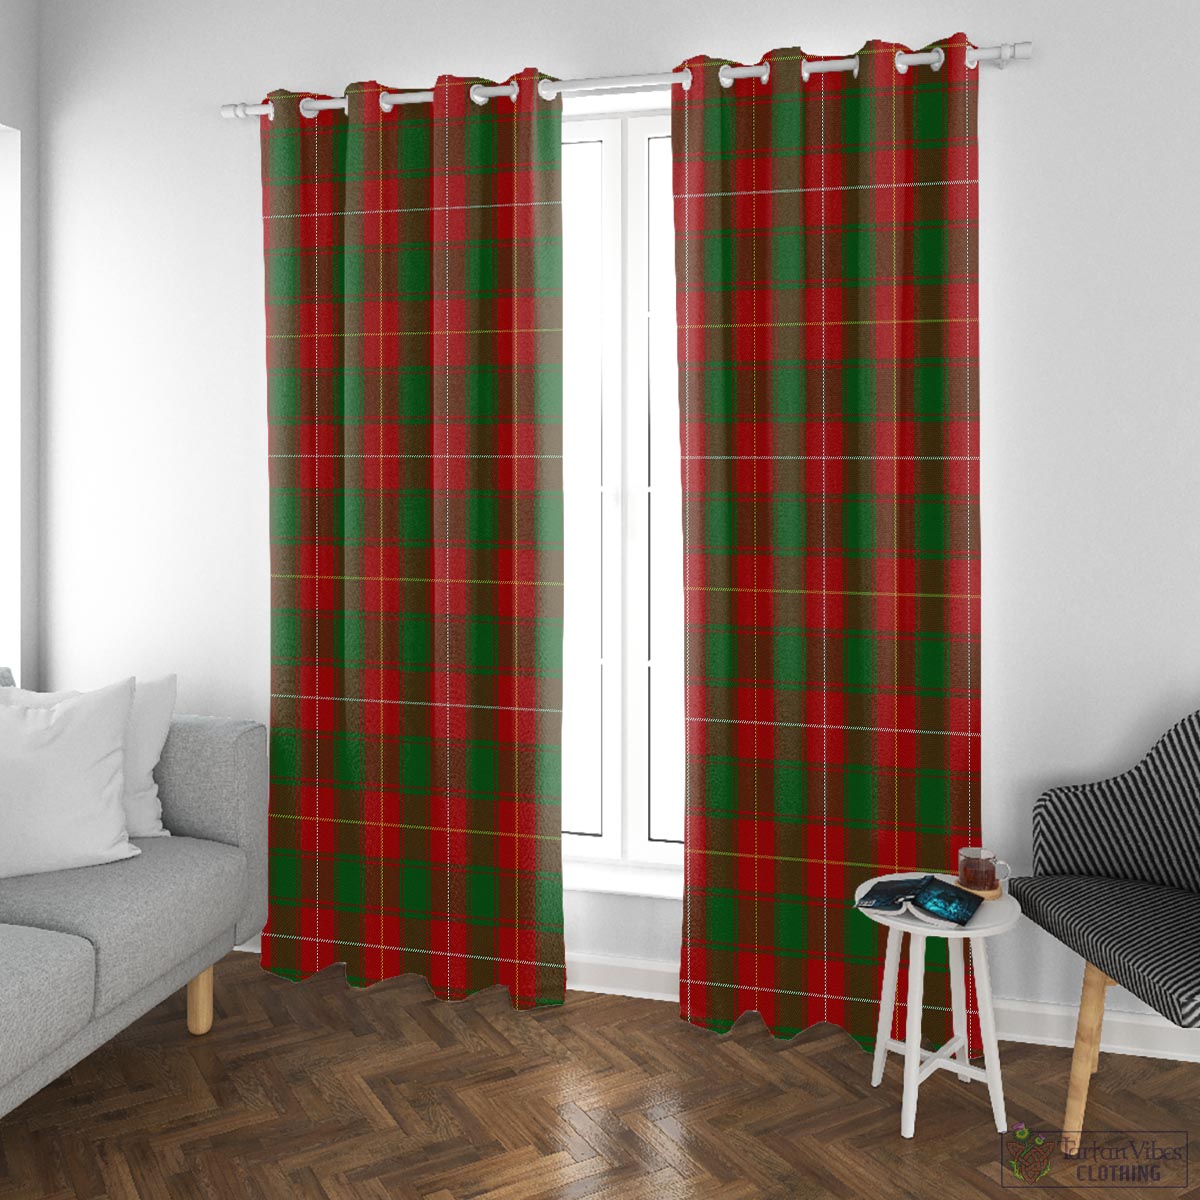 MacFie Tartan Window Curtain